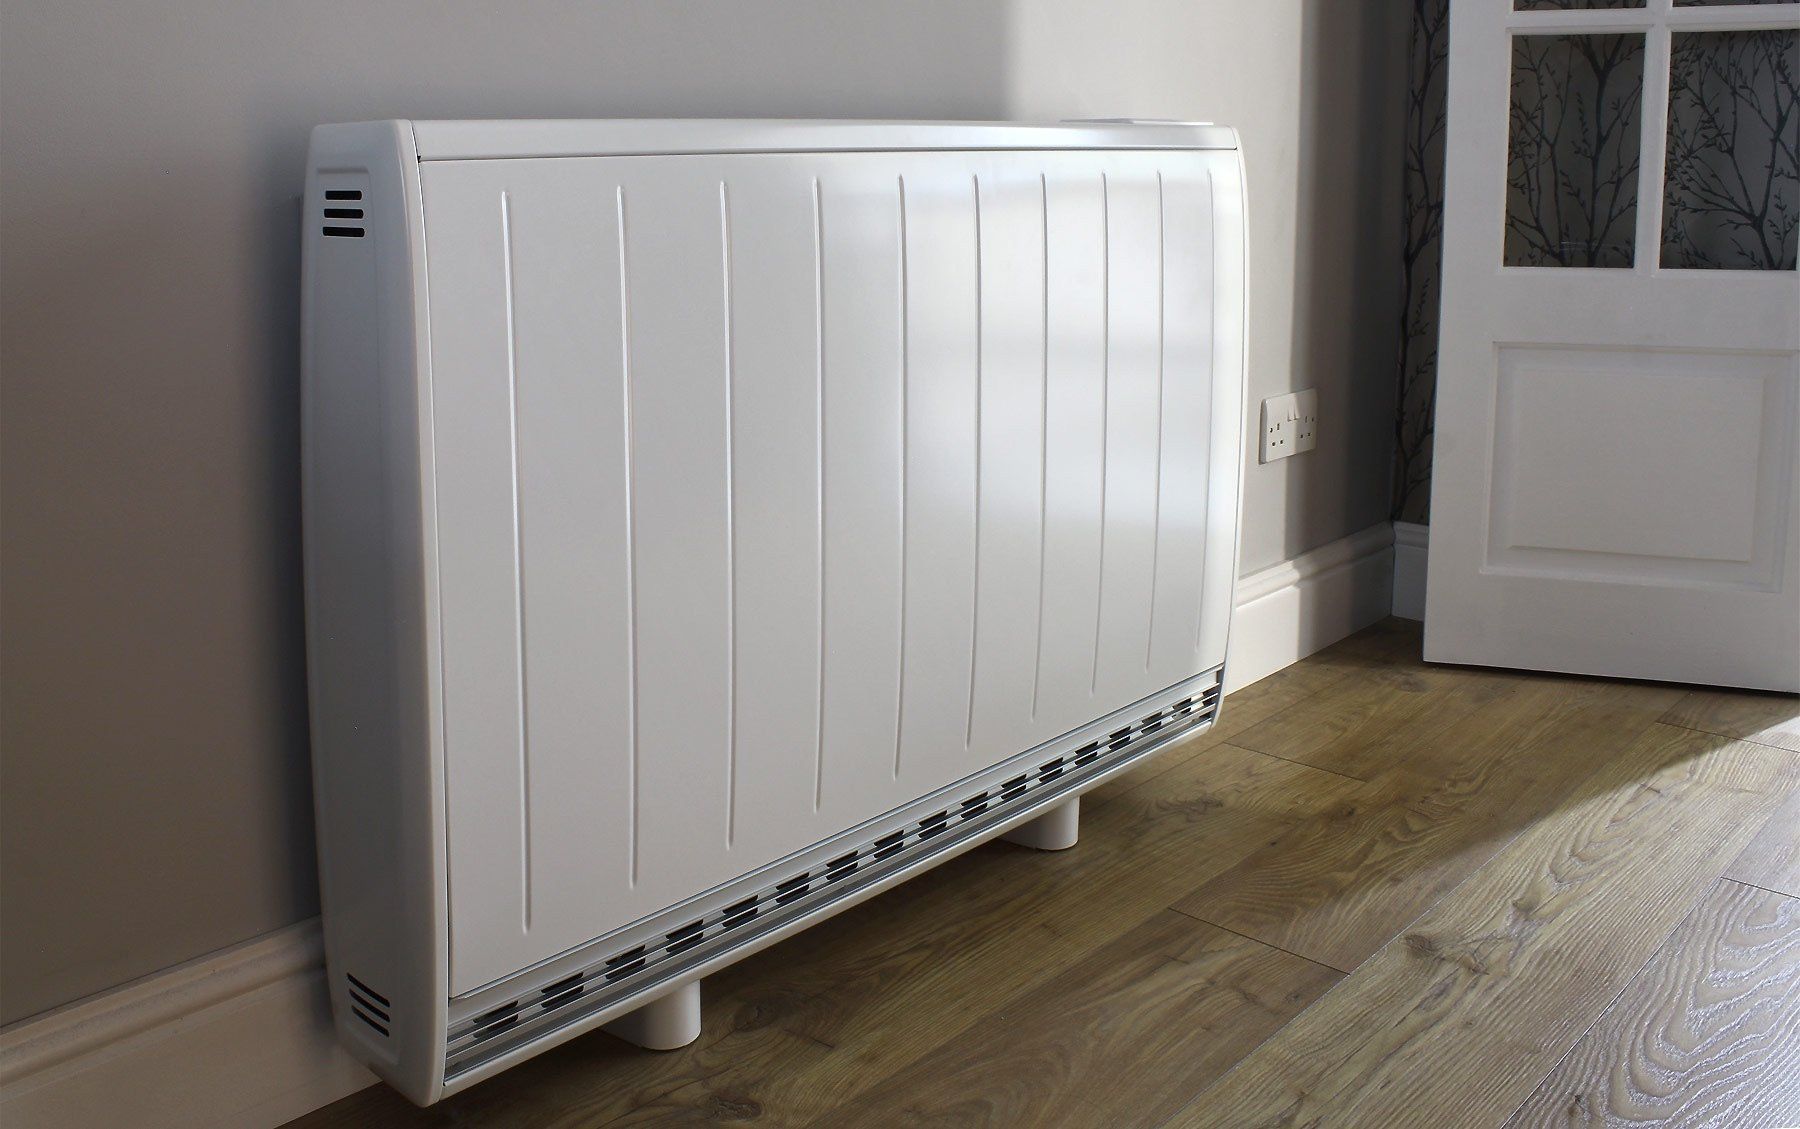 do immersion heaters heat radiators?